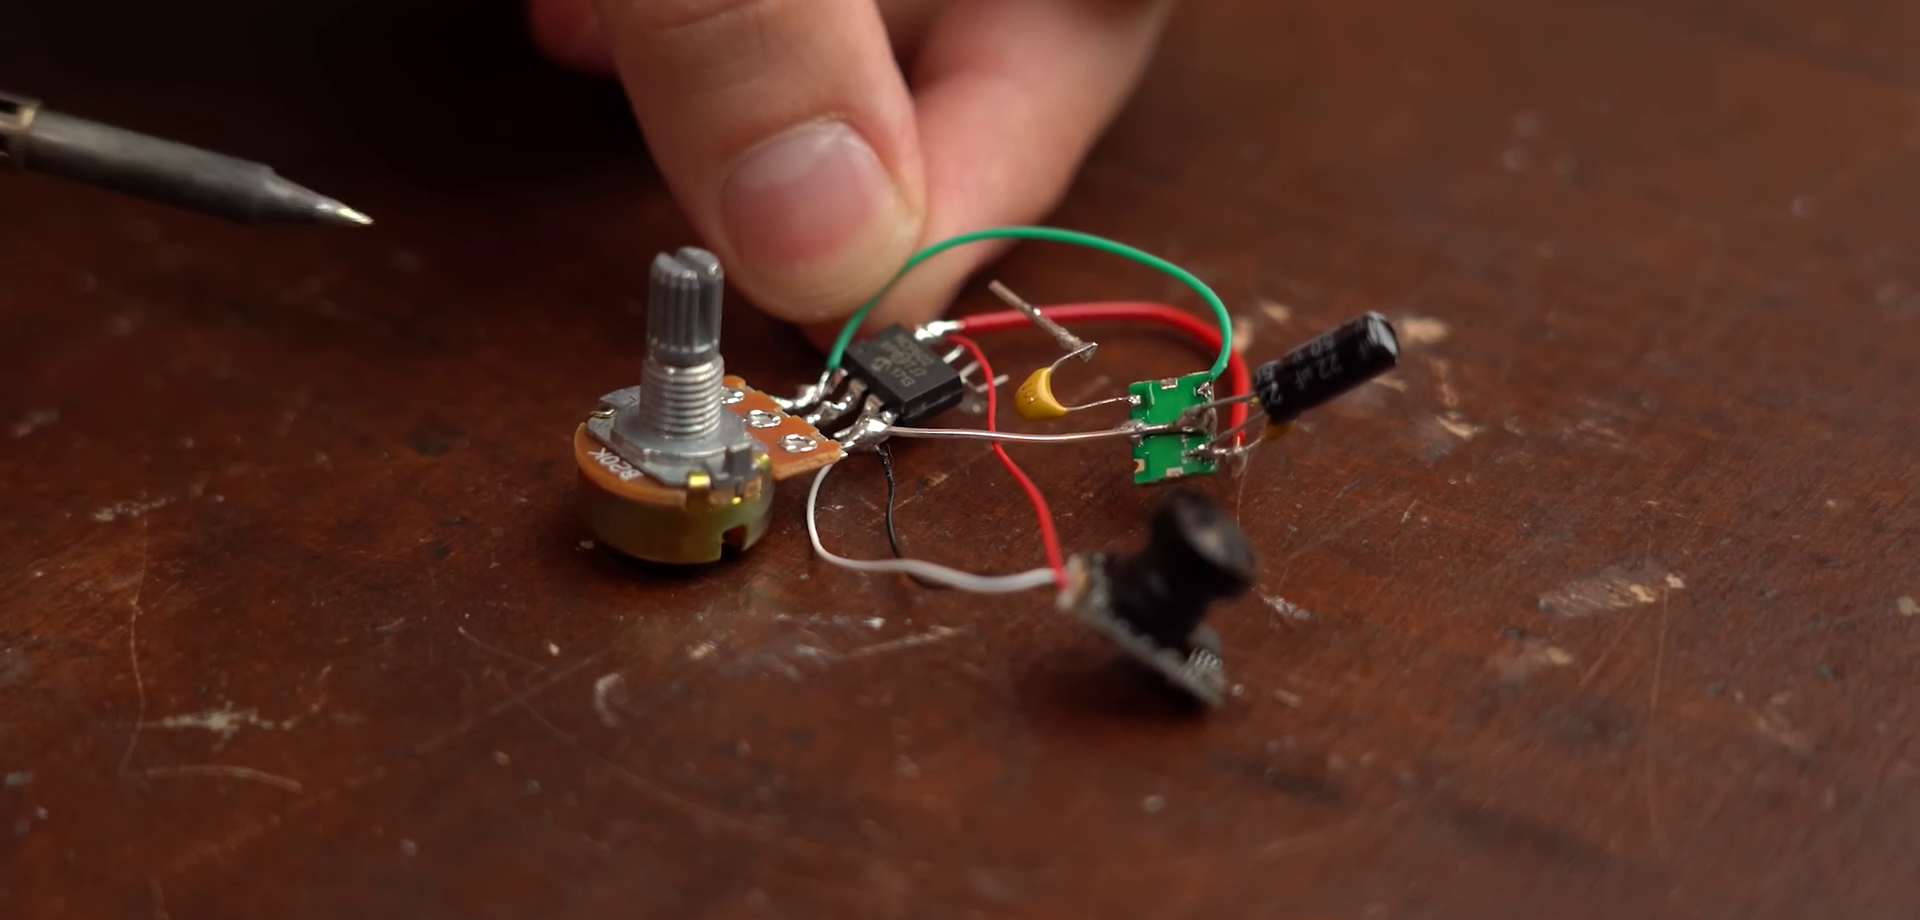 DIY Video Transmitter Turned WiFi Jammer